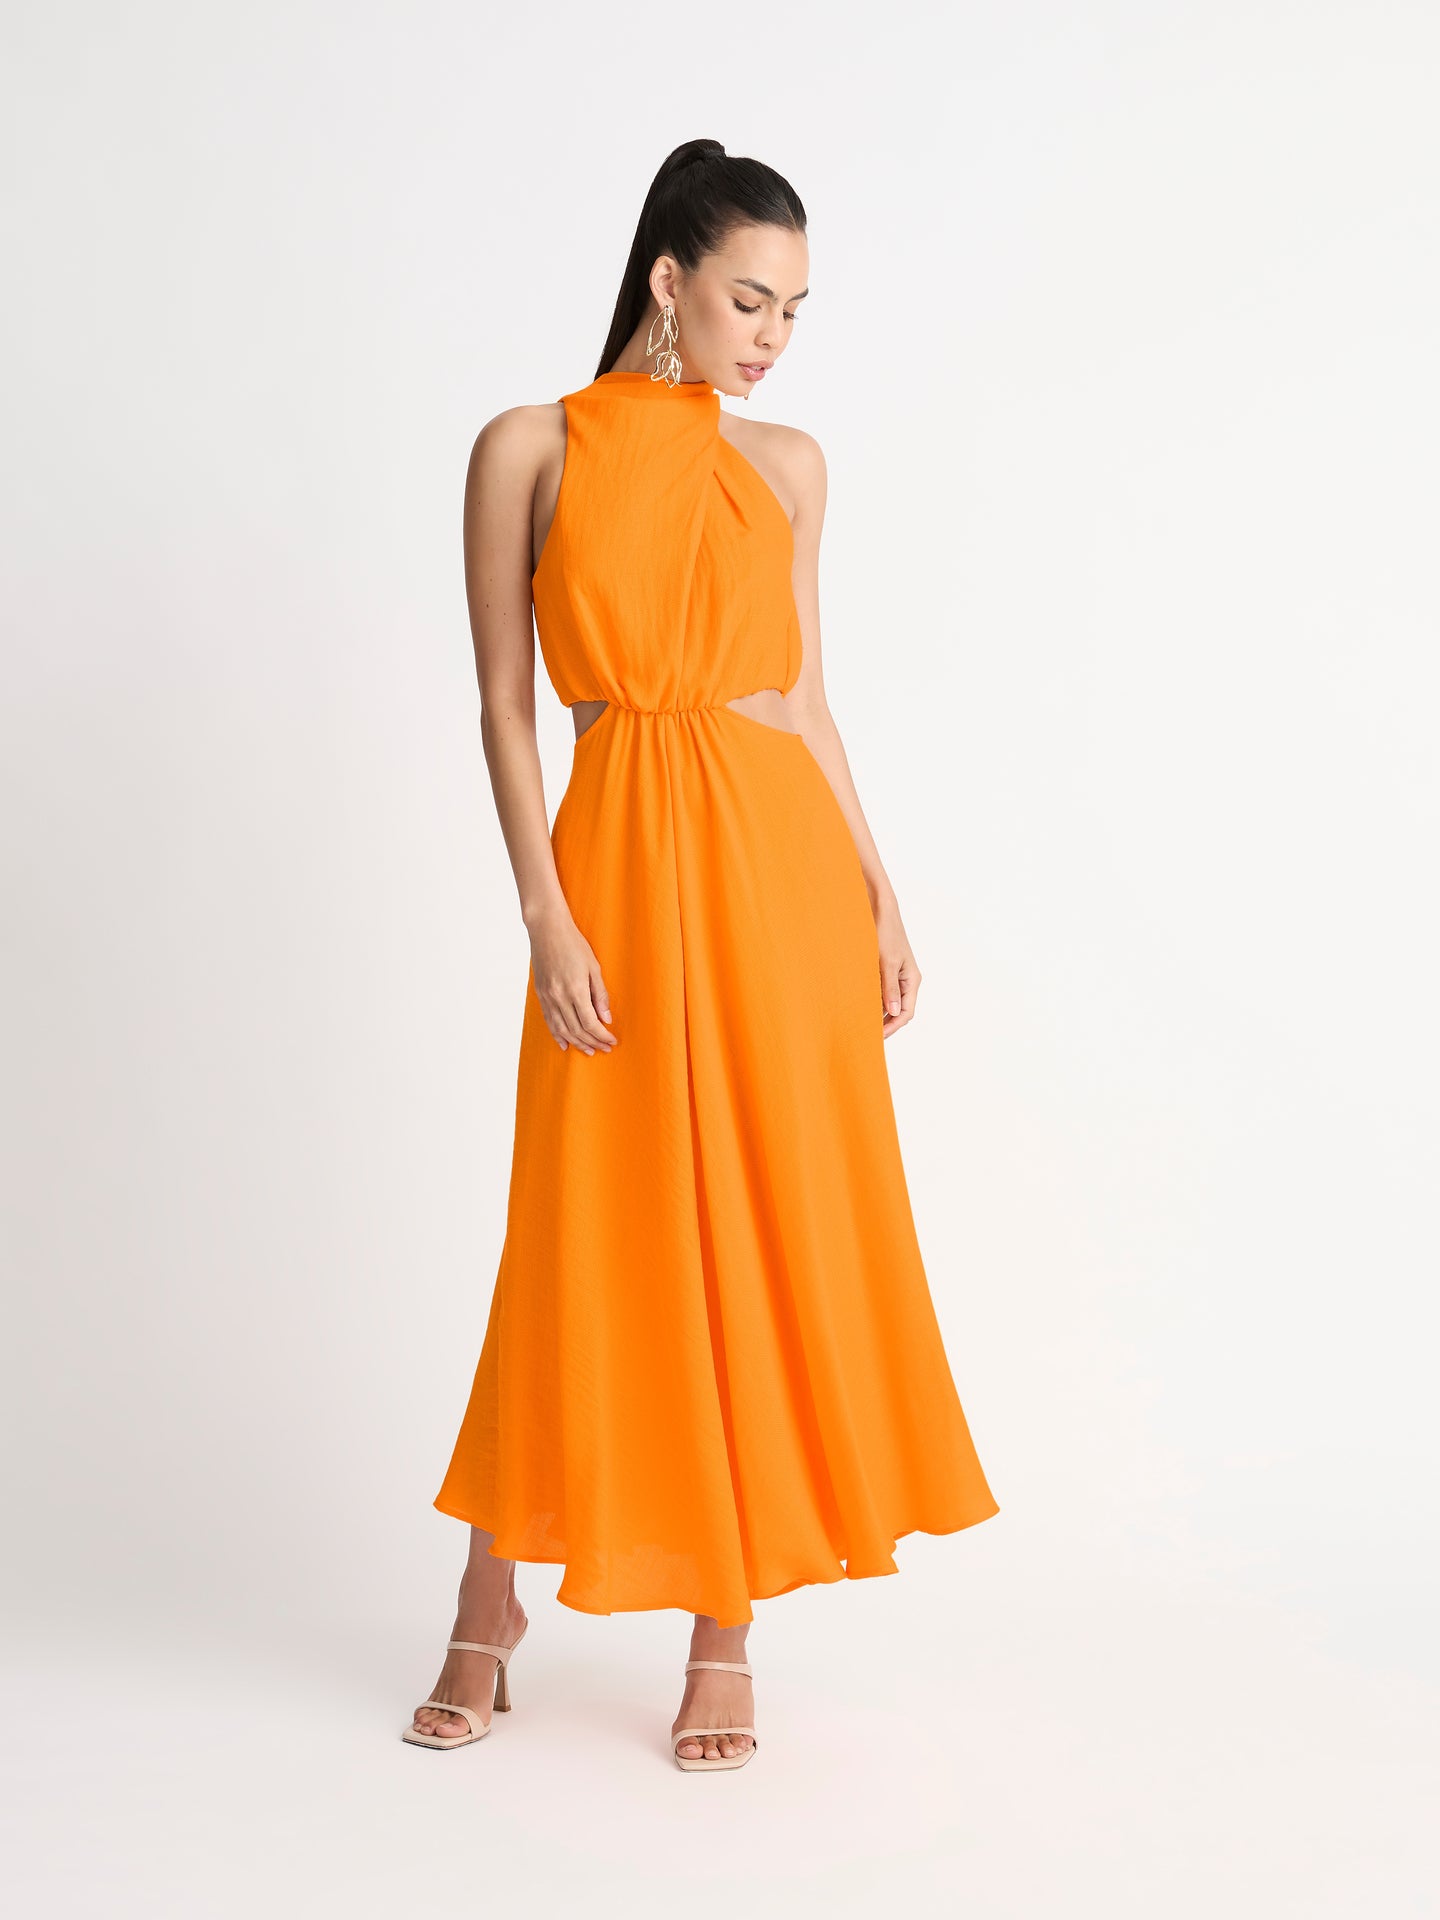 Shop Our Range Of Gorgeous Orange Dresses Online - SHEIKE